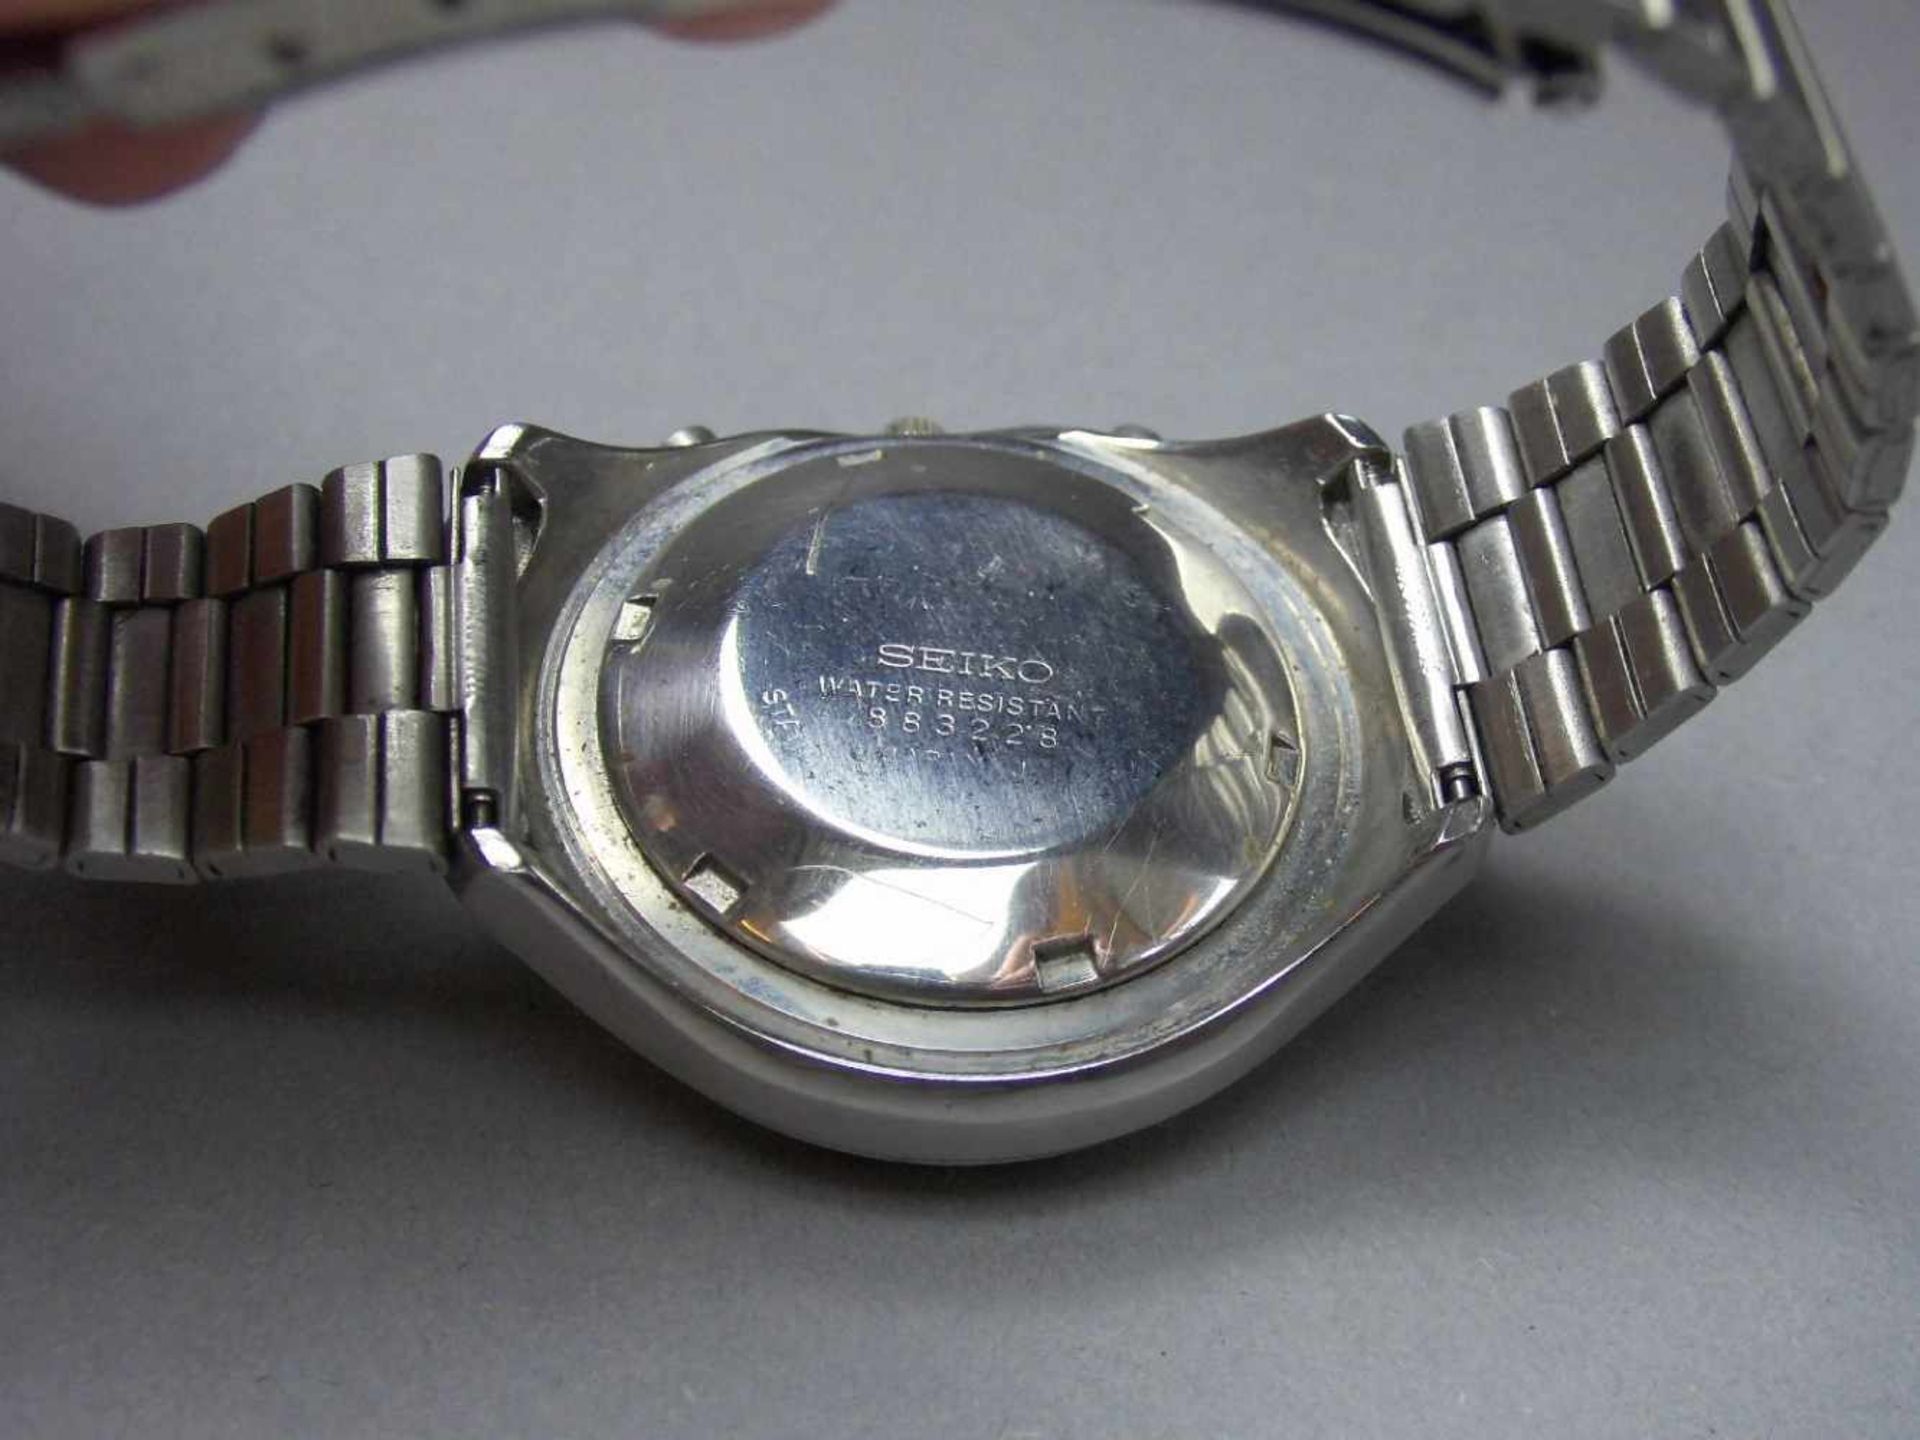 VINTAGE CHRONOGRAPH / ARMBANDUHR : SEIKO - 6139 - 7160 T / wristwatch, Japan, 1970er Jahre, - Image 8 of 8